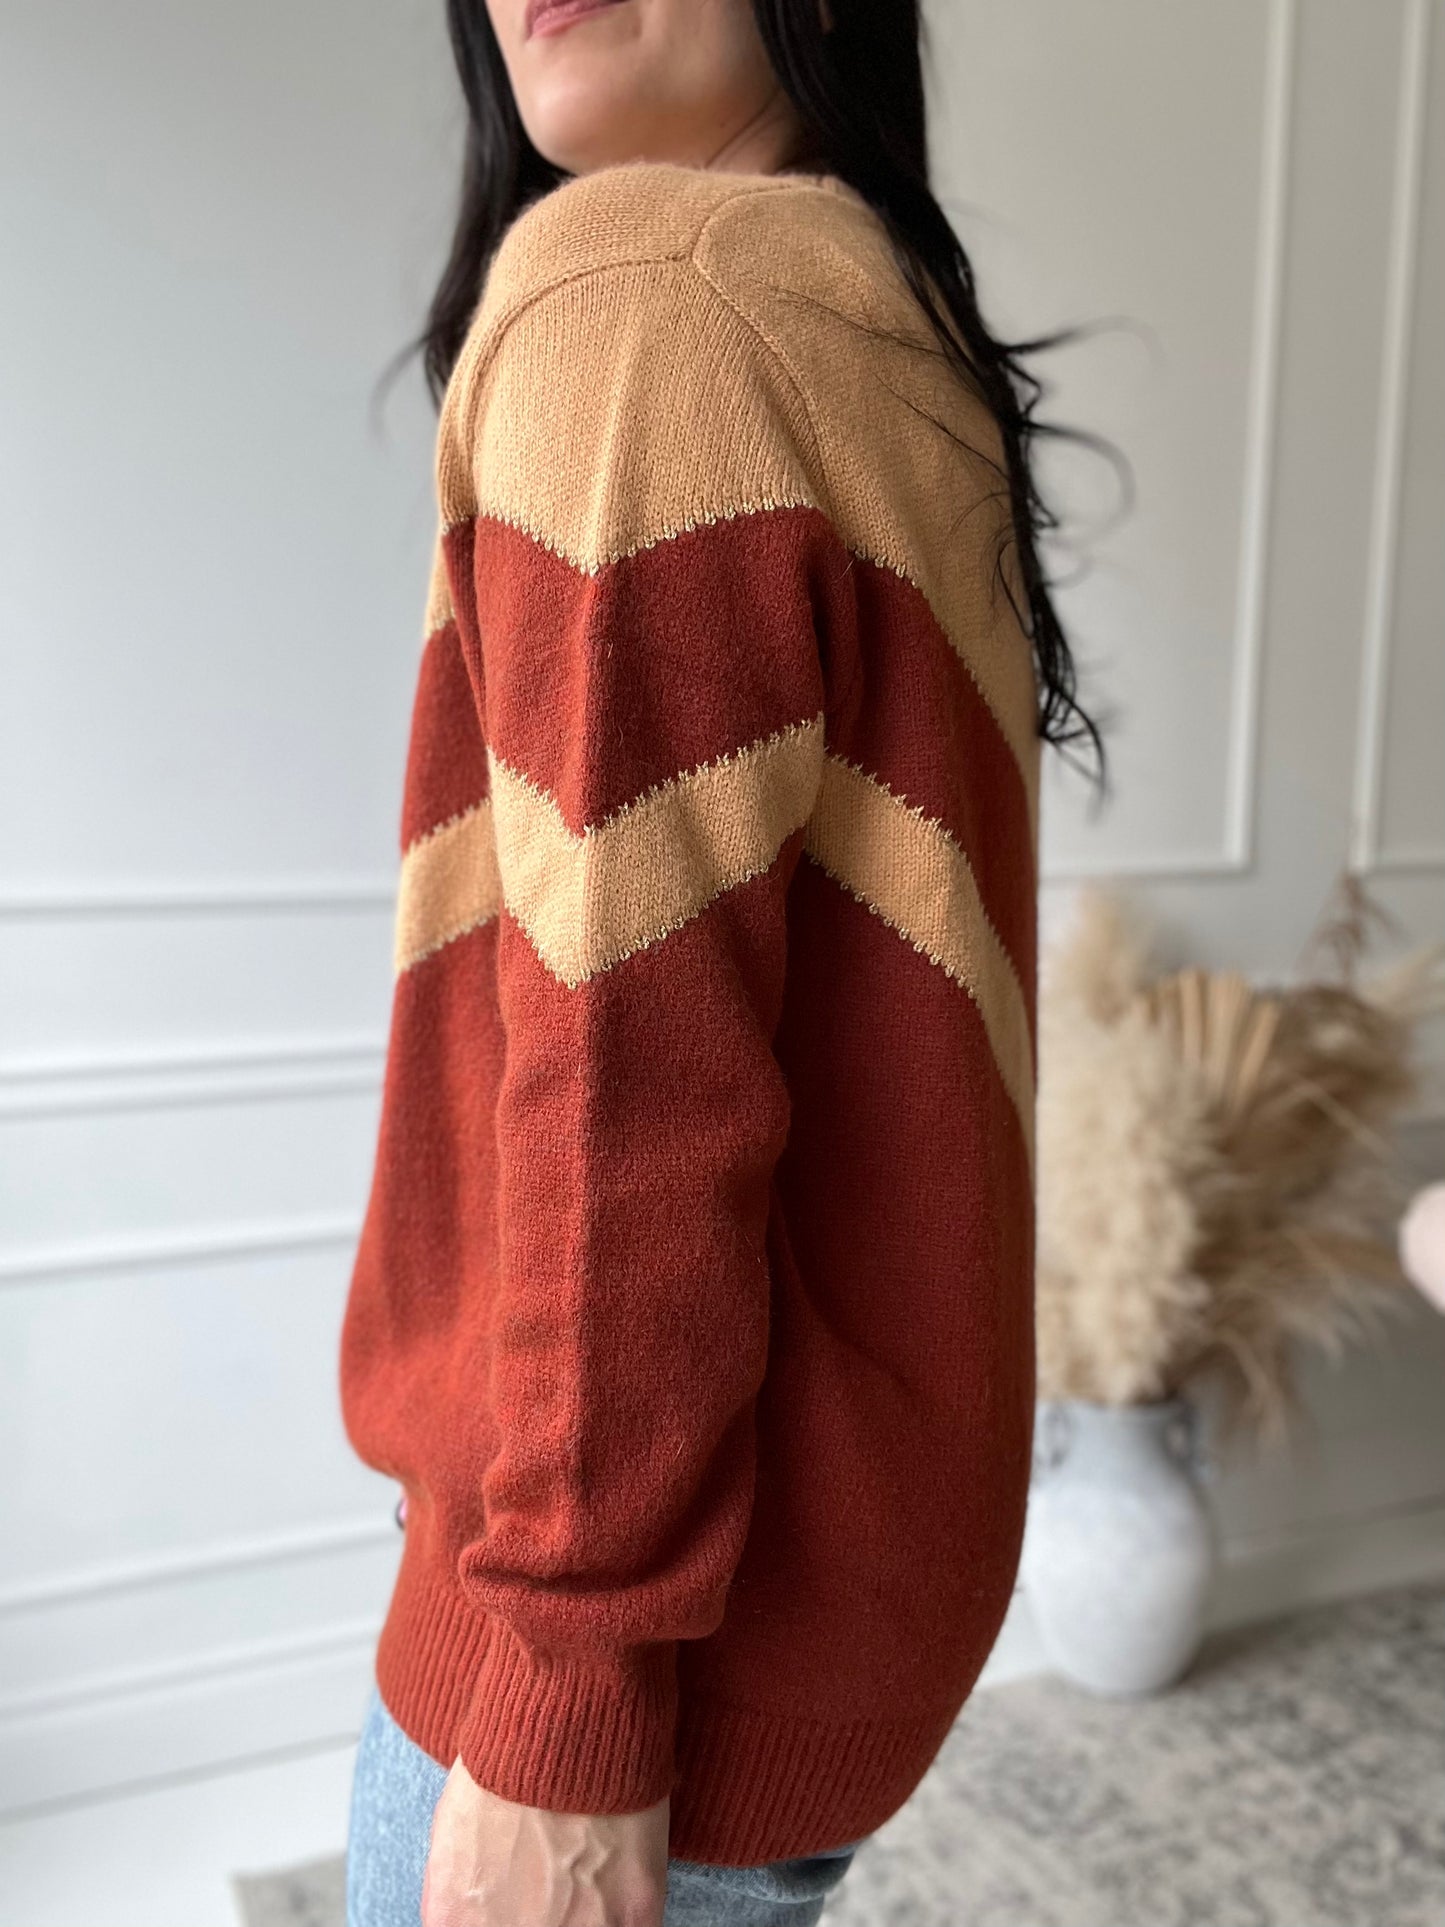 Burnt Neutrals Knit Sweater - Size XL